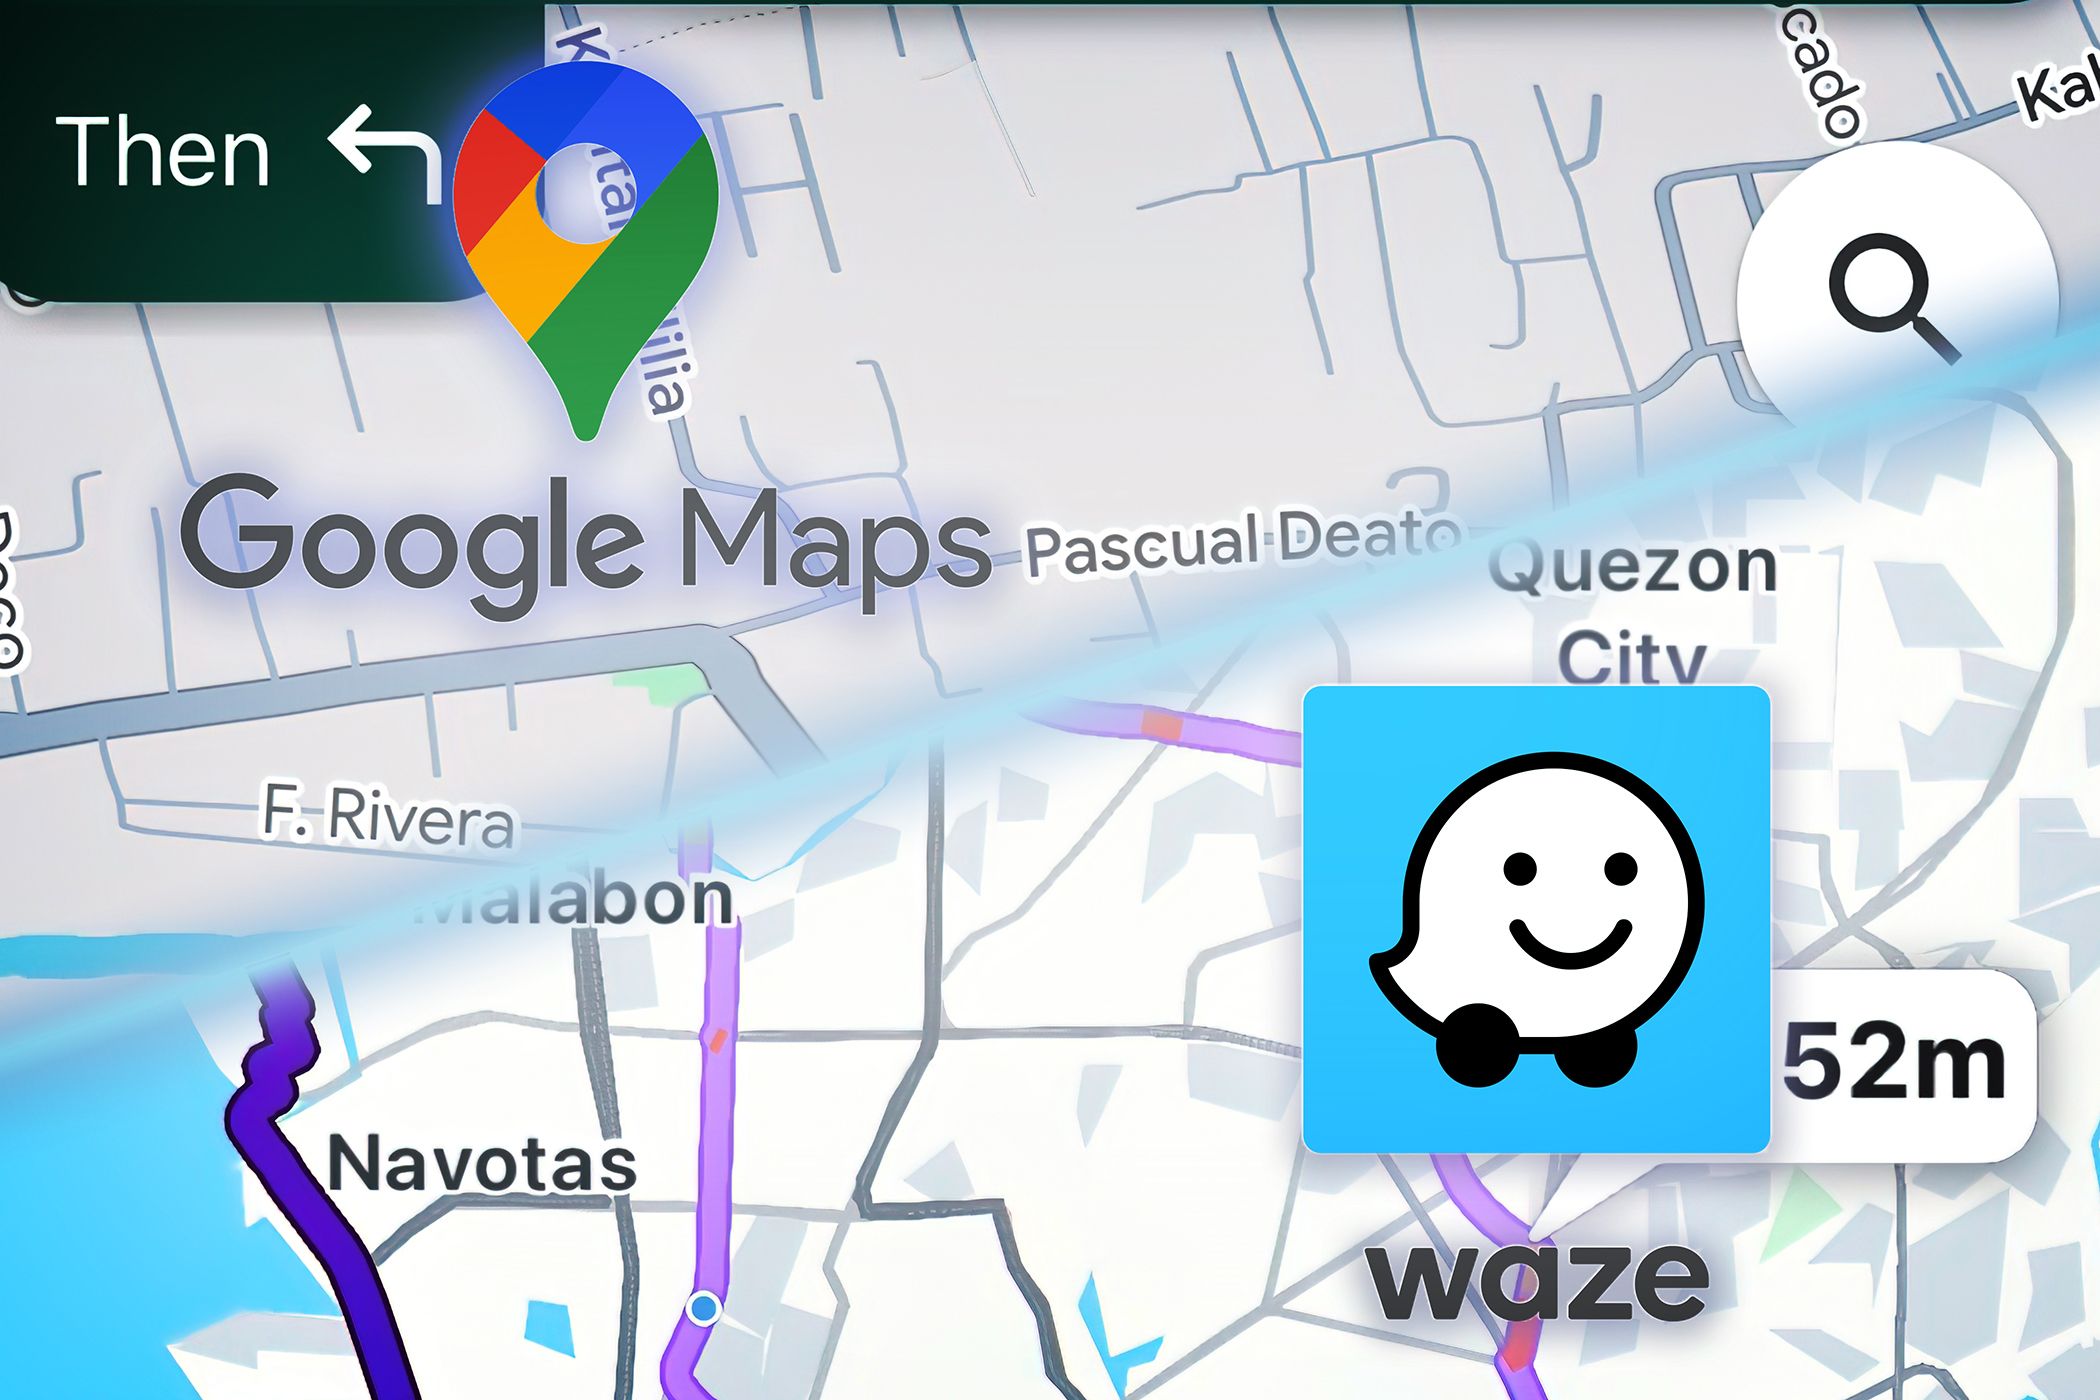 Google Maps and Waze logos over their respective interfaces